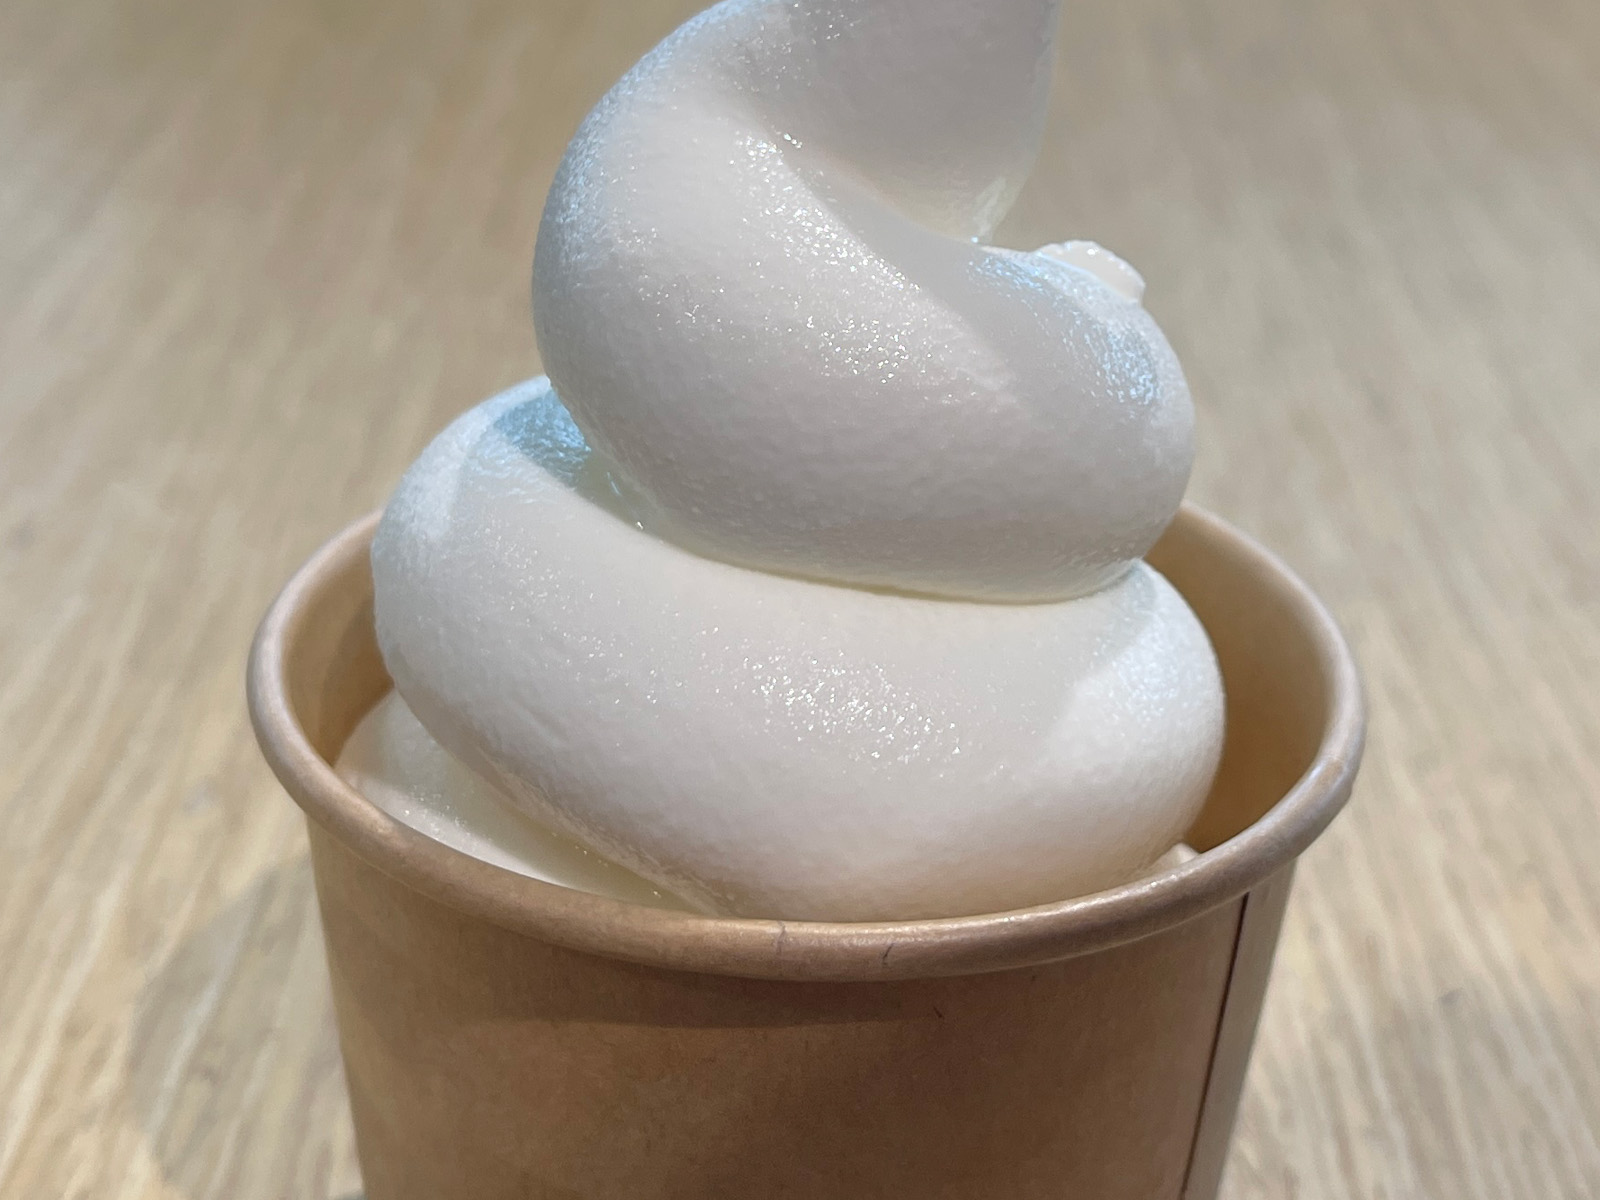 Gree Pocketsで北海道濃厚ソフトクリームを食べたよ！／新千歳空港